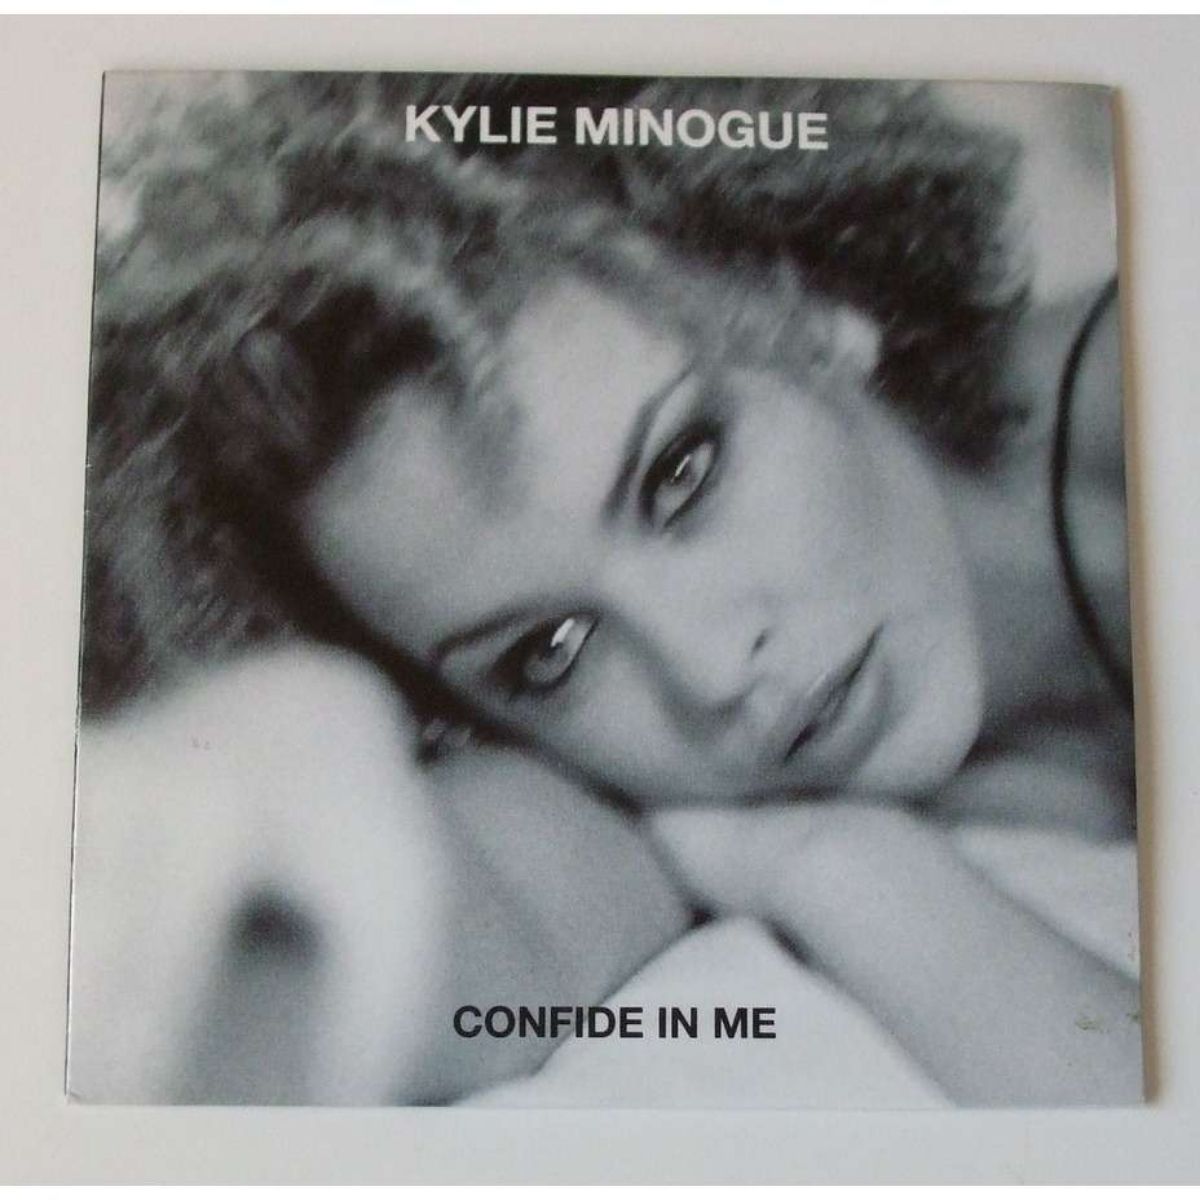 Capa do álbum "Confide In Me" da Kylie Minogue